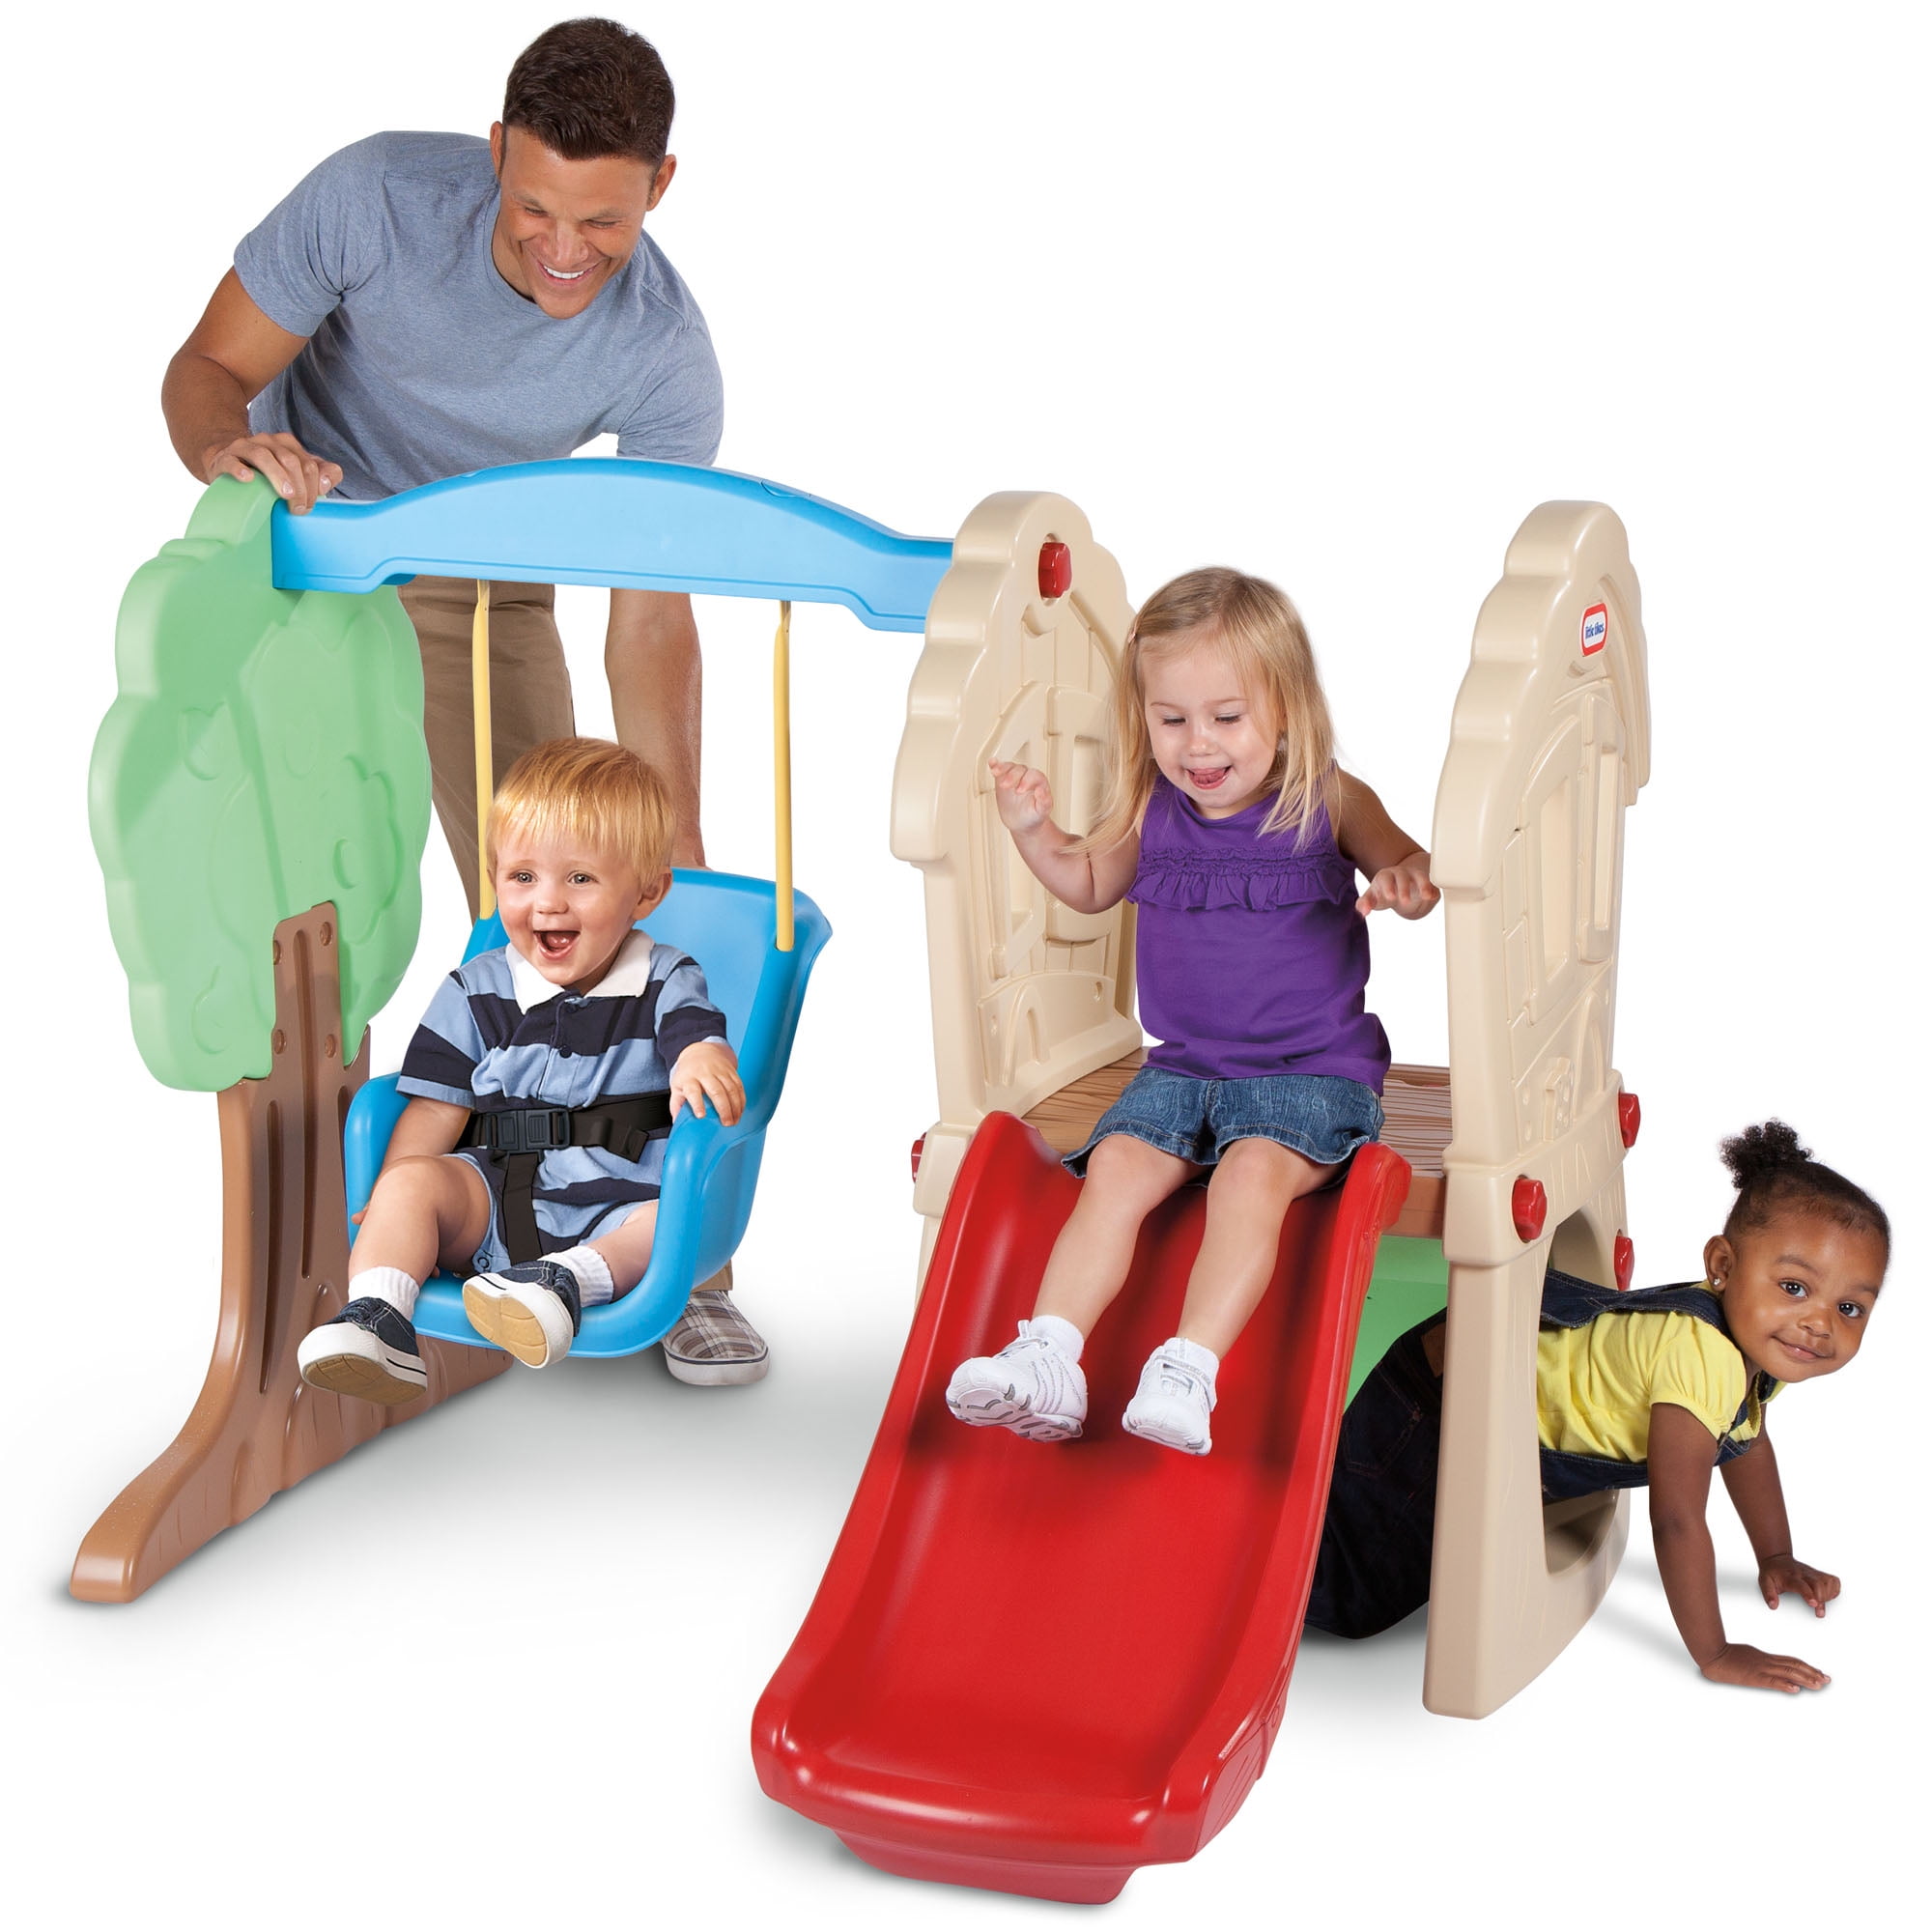 Little Tikes Hide And Seek Climber and Swing - Kids Slide Backyard Play Set - 1